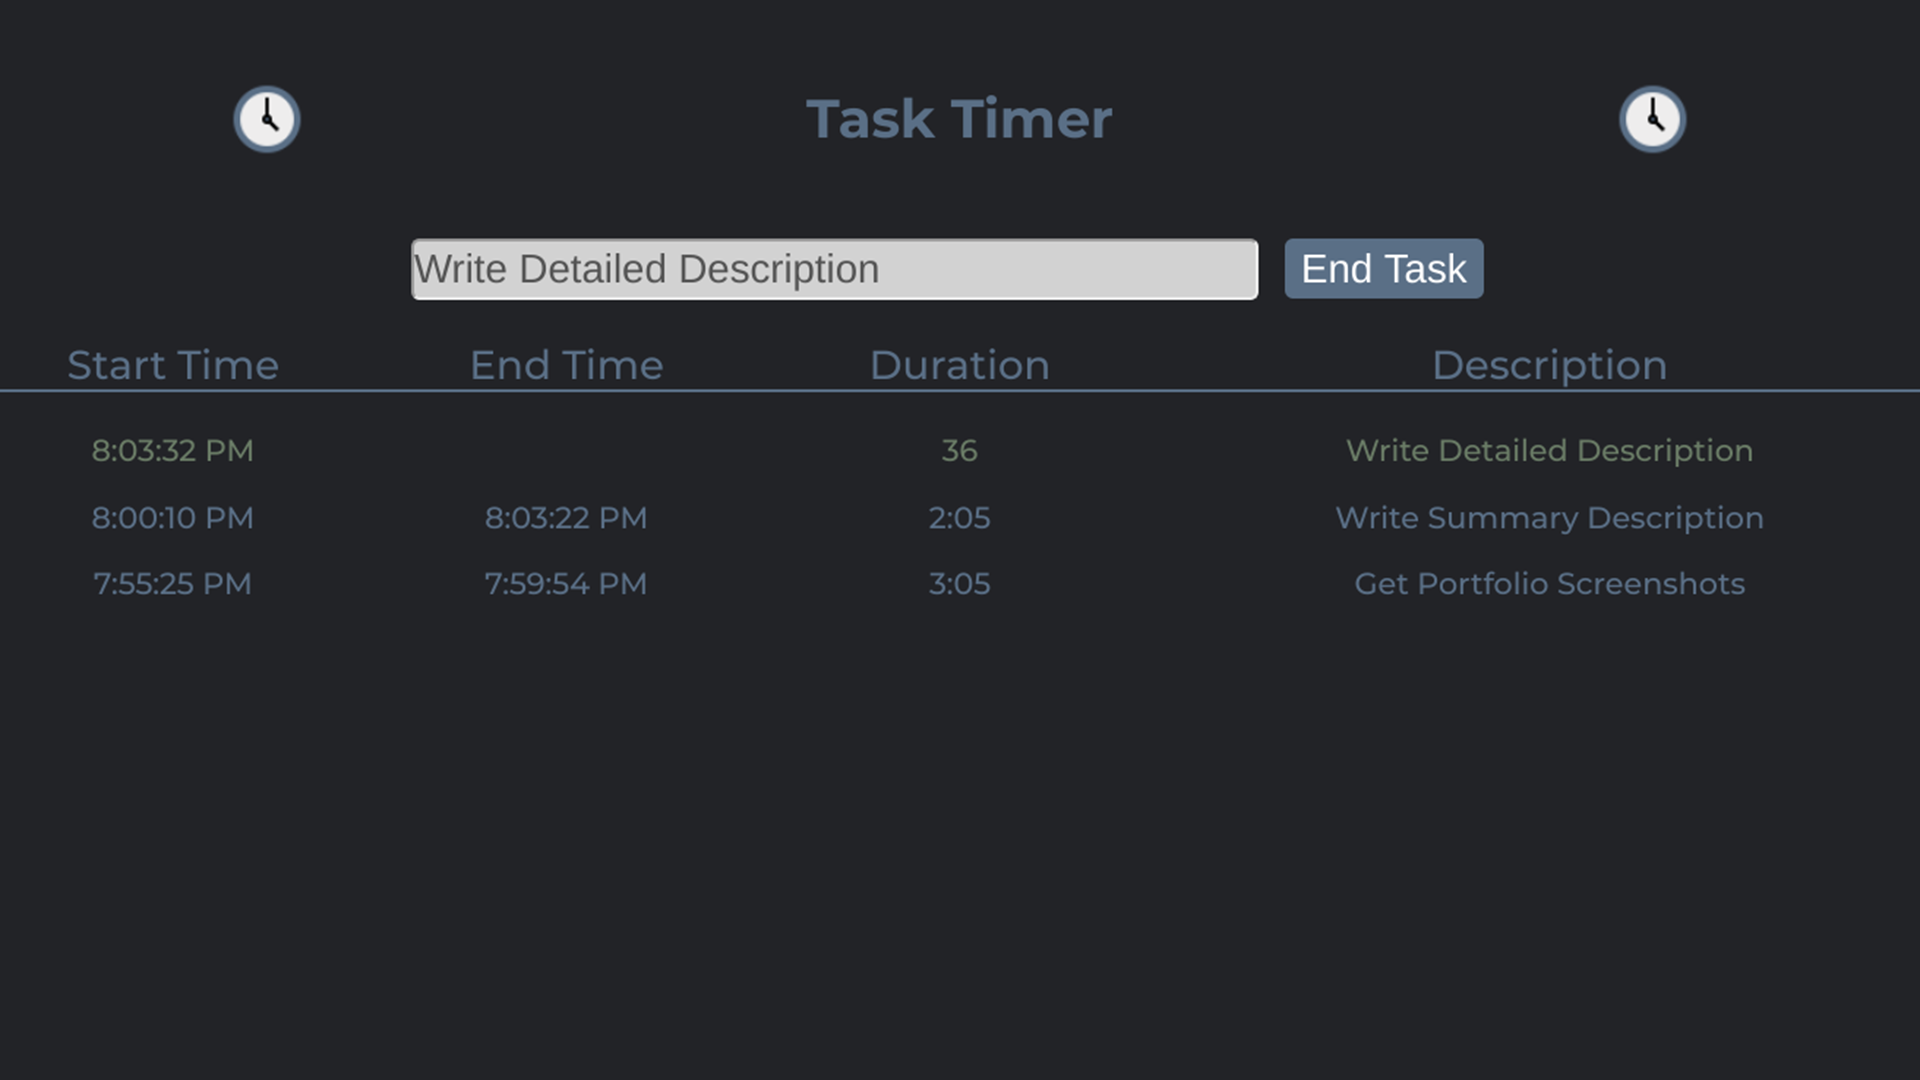 Task Timer